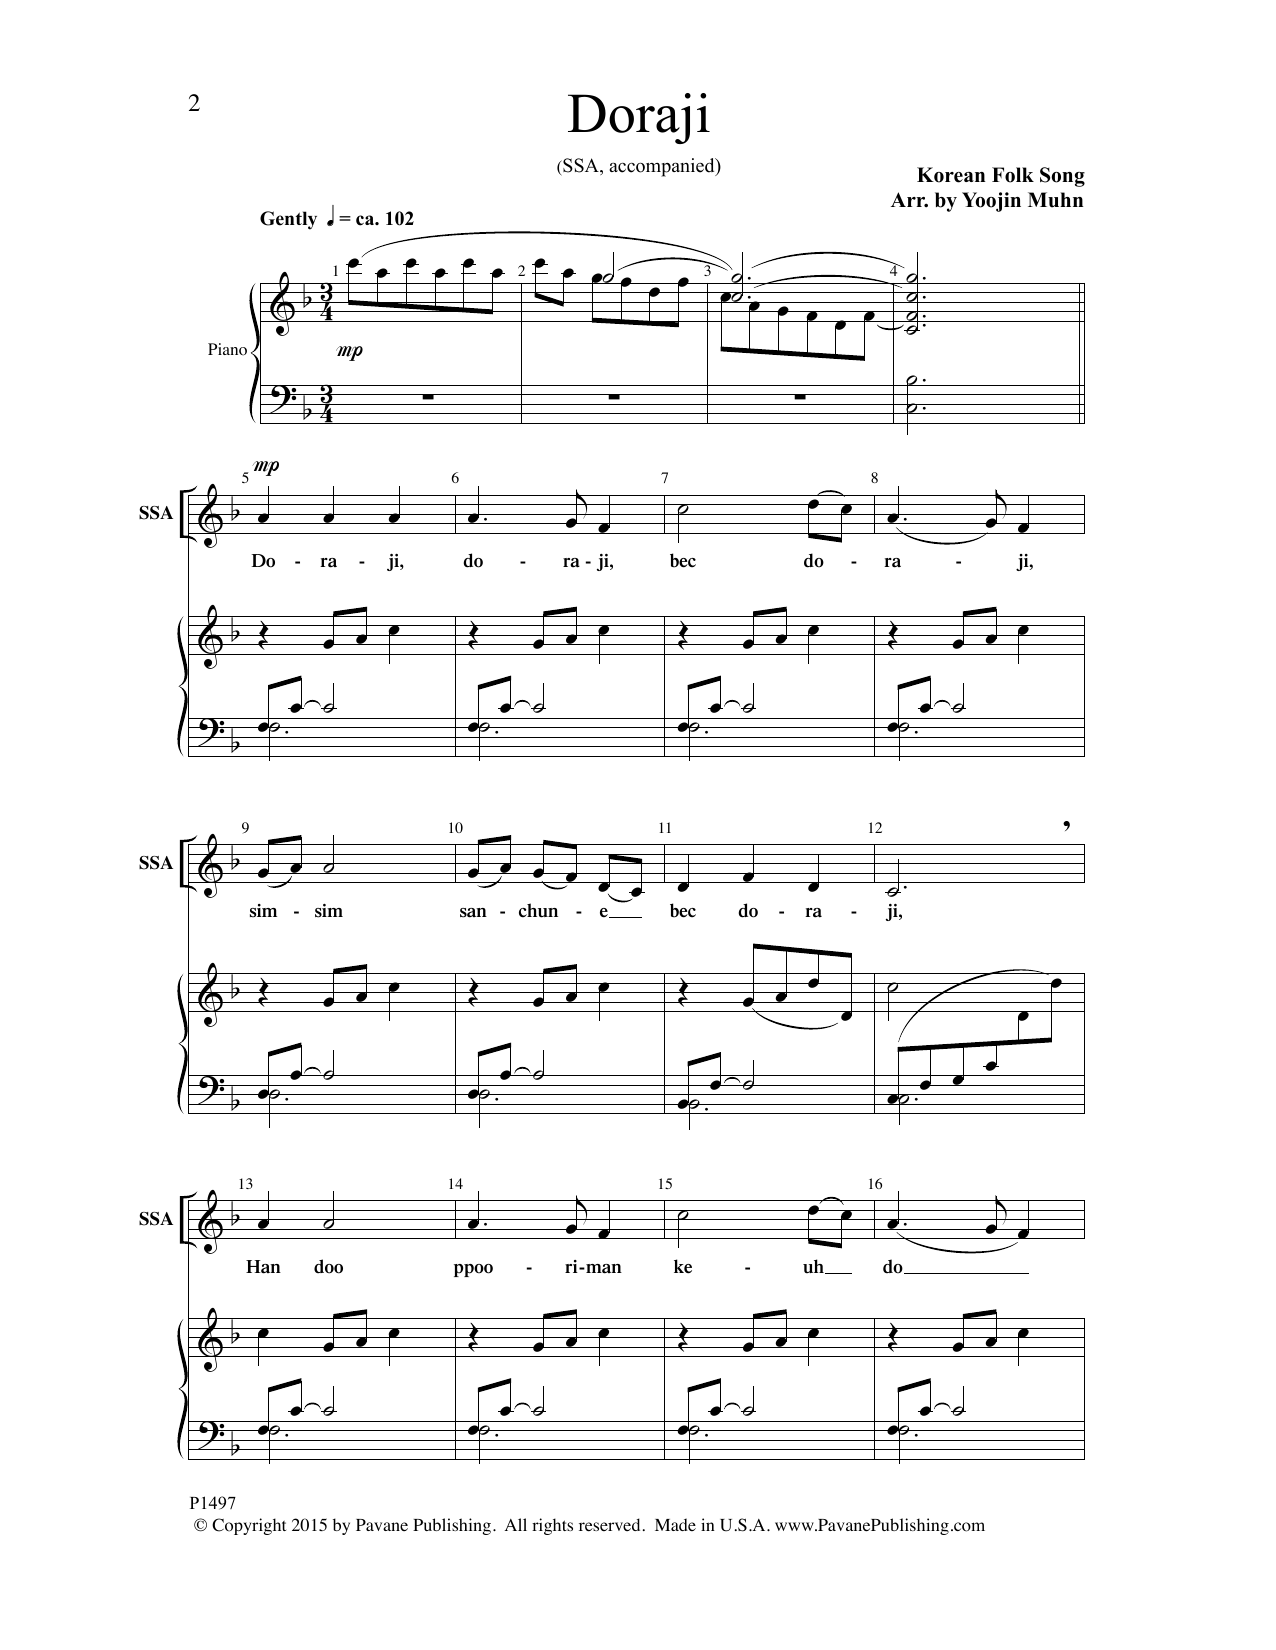 Yoojin Muhn Doraji Sheet Music Notes & Chords for Choral - Download or Print PDF